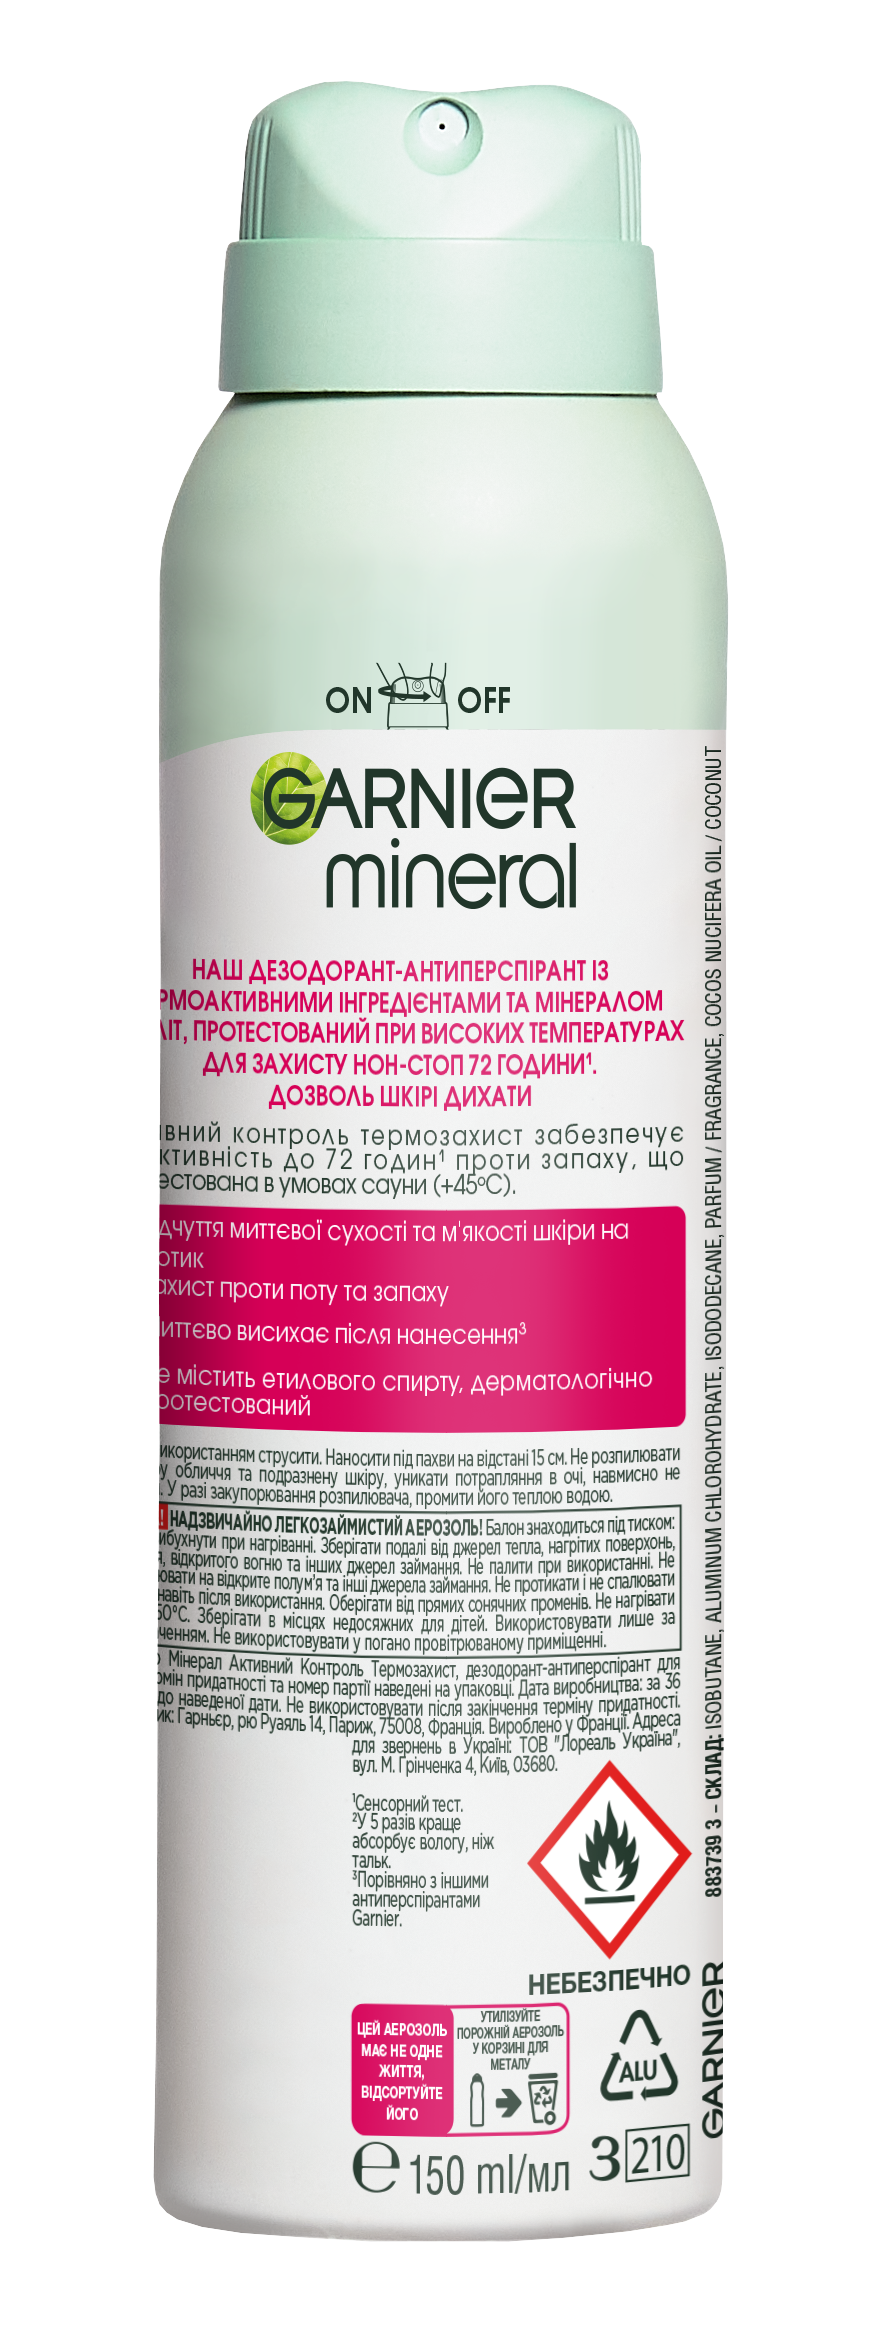 Дезодорант-антиперспирант Garnier Mineral Активный Контроль Термозащита, 150 мл - фото 2